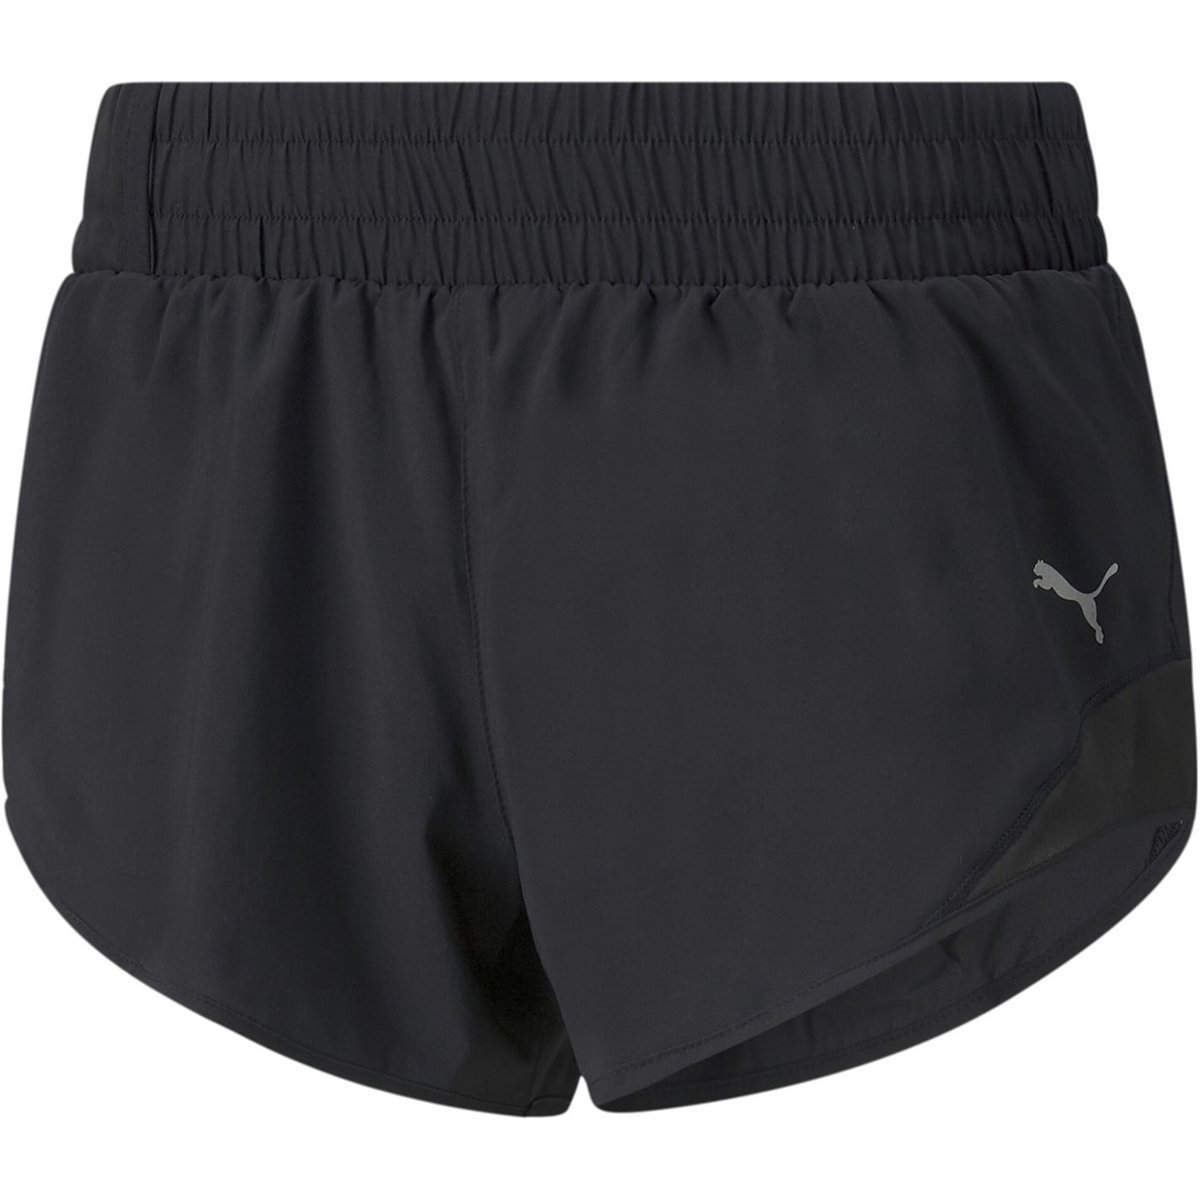 Puma Training Evoknit seamless 5 inch shorts in spellbound